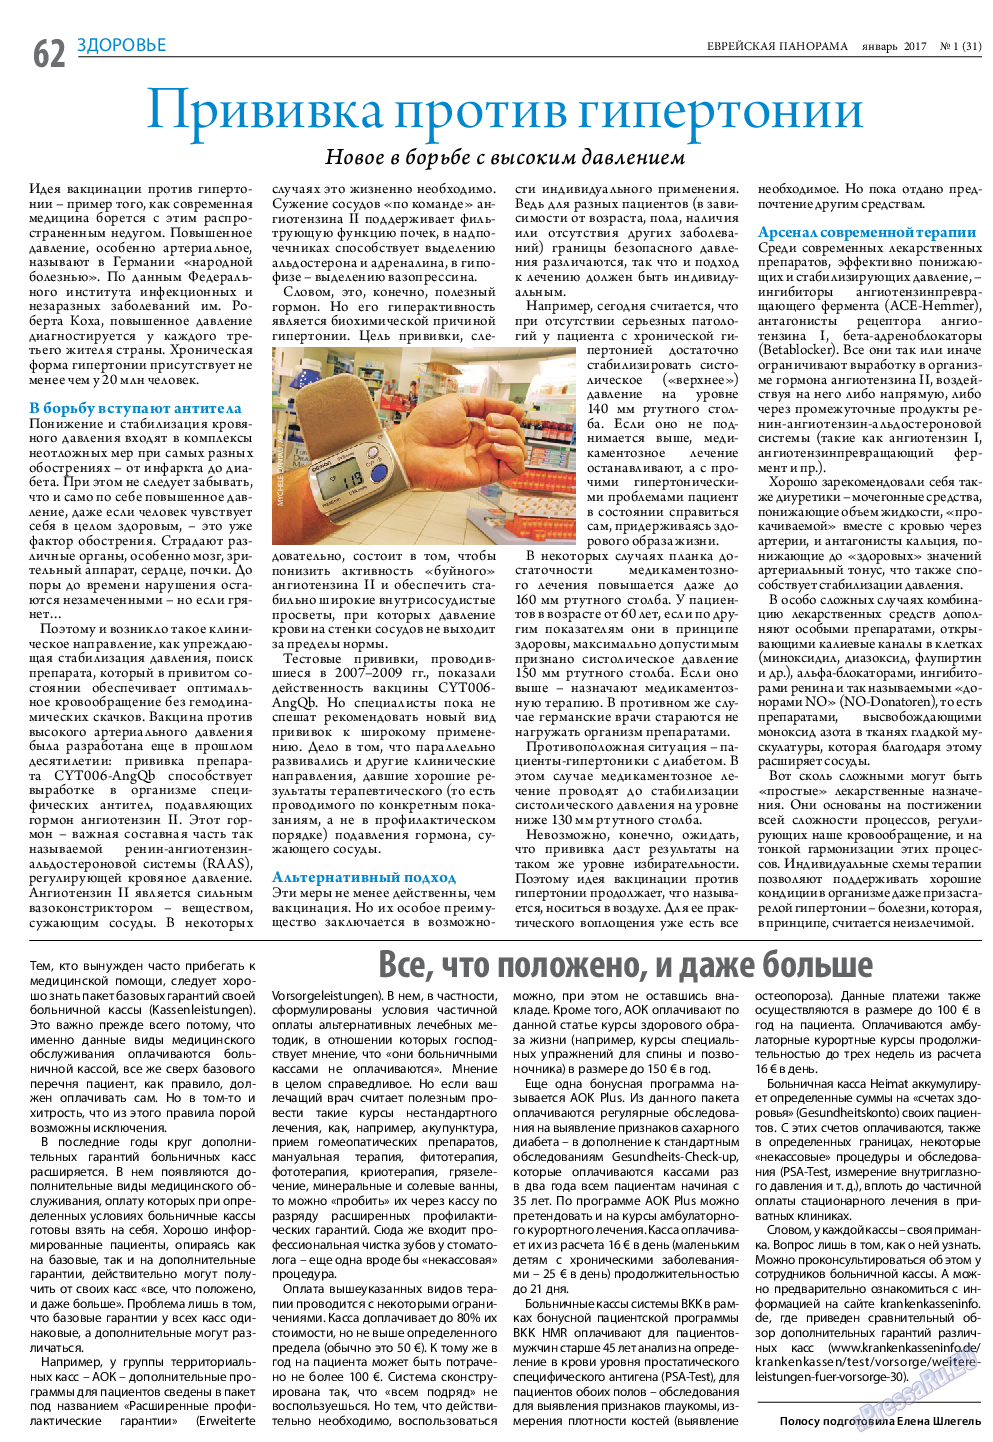 Еврейская панорама, газета. 2017 №1 стр.62